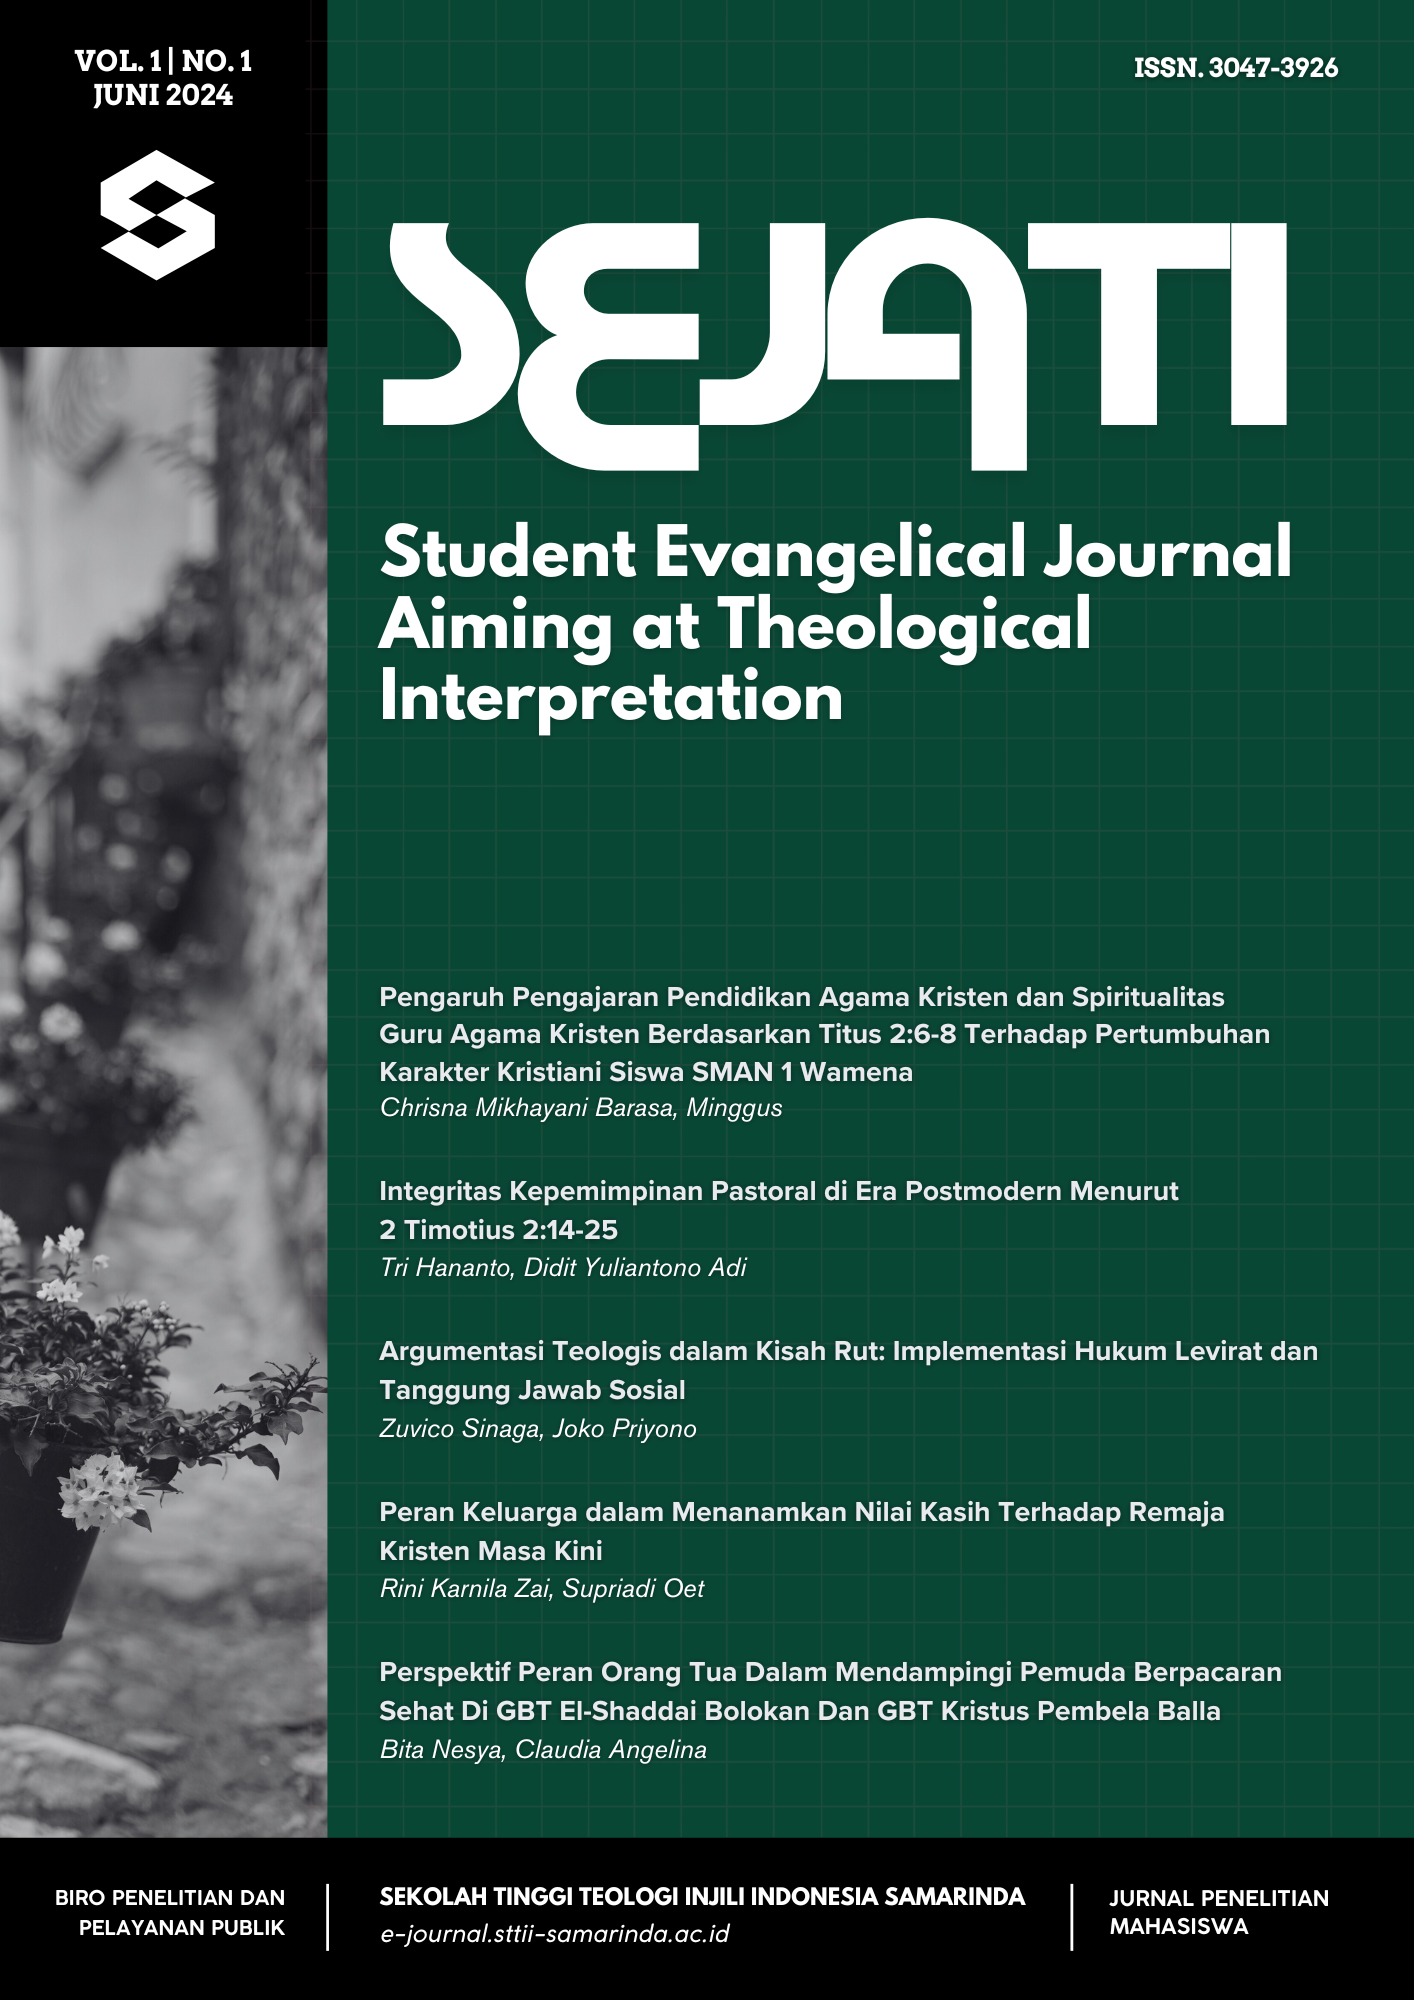 					View Vol. 1 No. 1: SEJATI (Student Evangelical Journal Aiming at Theological Interpretation) Juni 2024
				